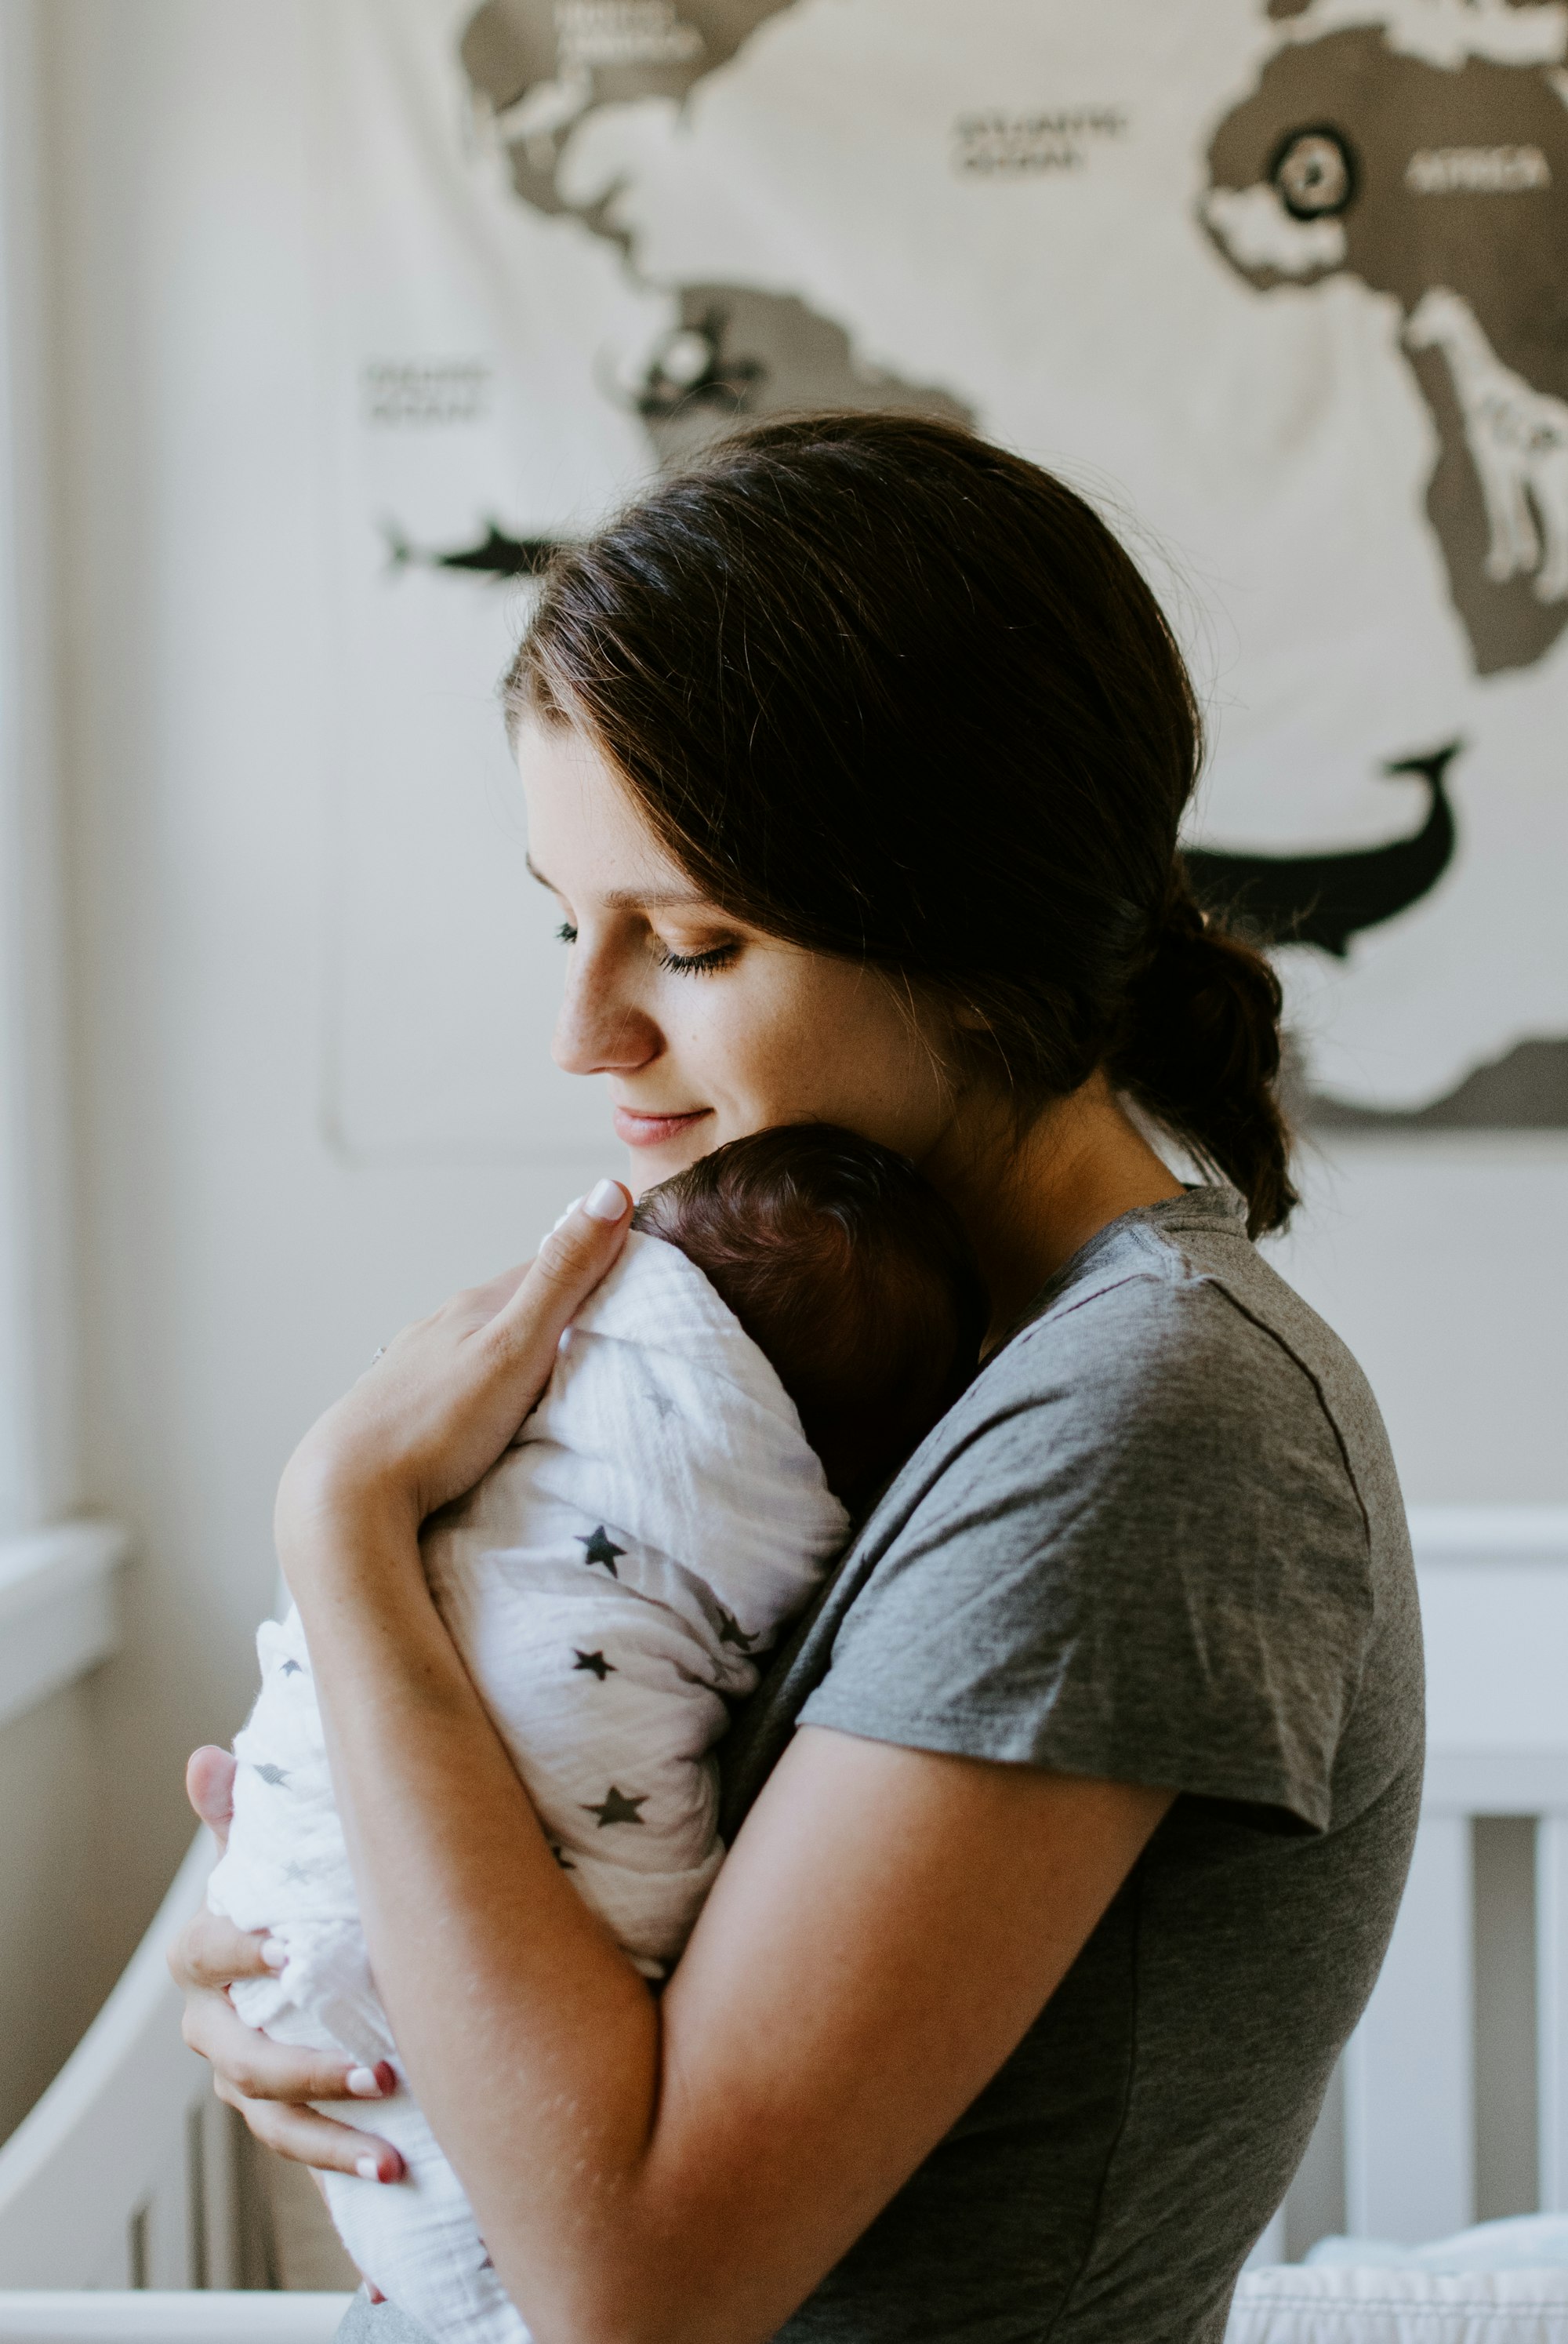 breastfeeding hormones, swaddled baby